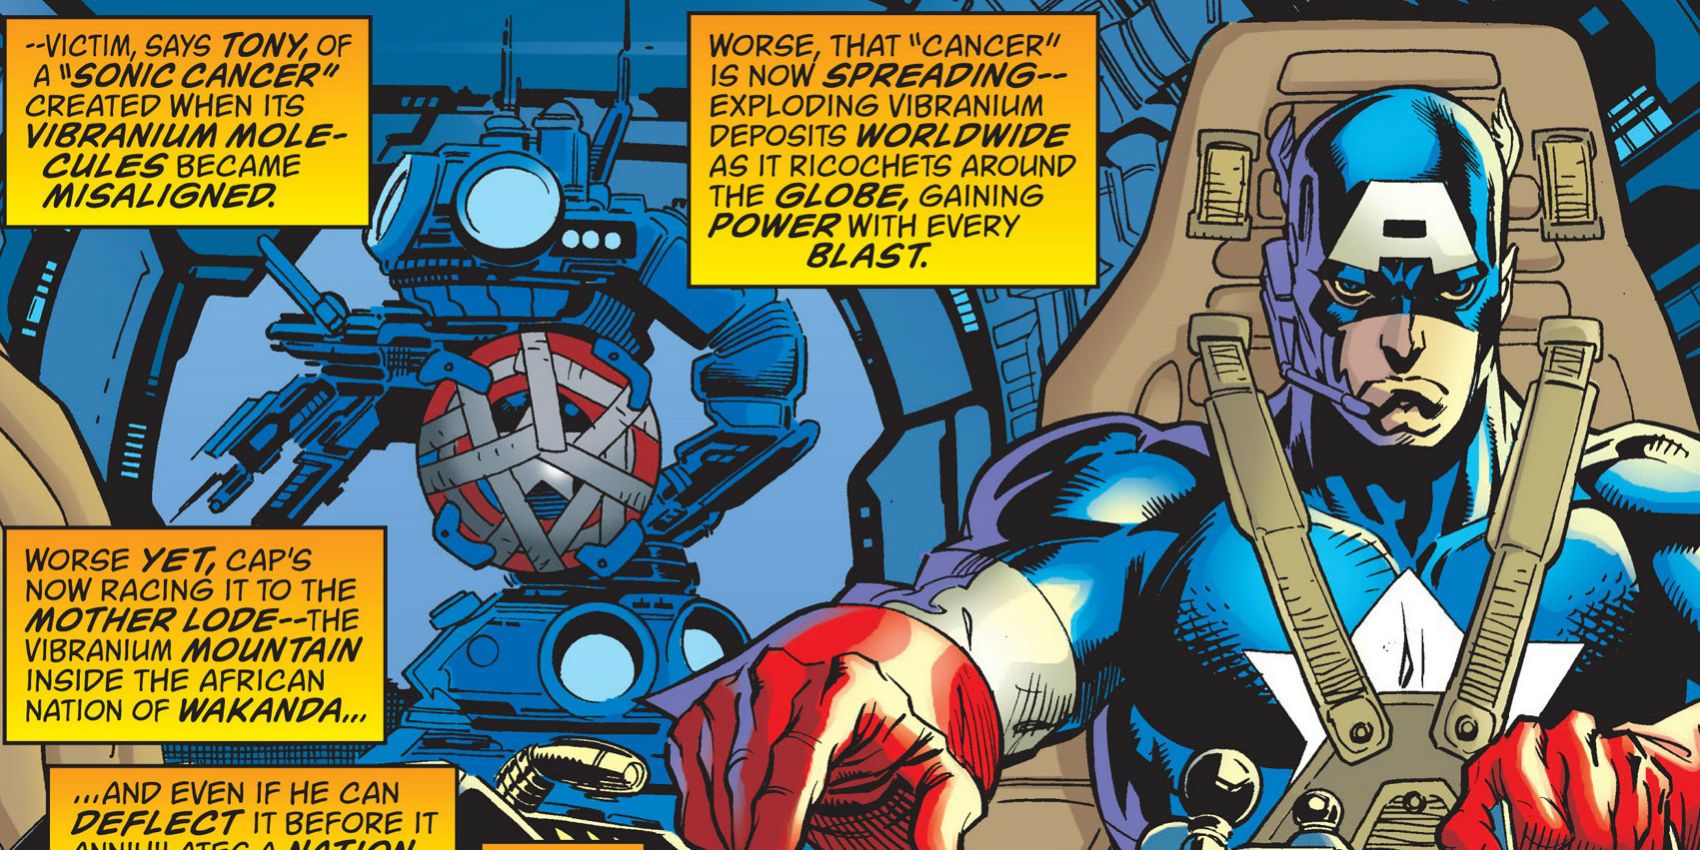 Captain America's shield develops Vibranium Cancer